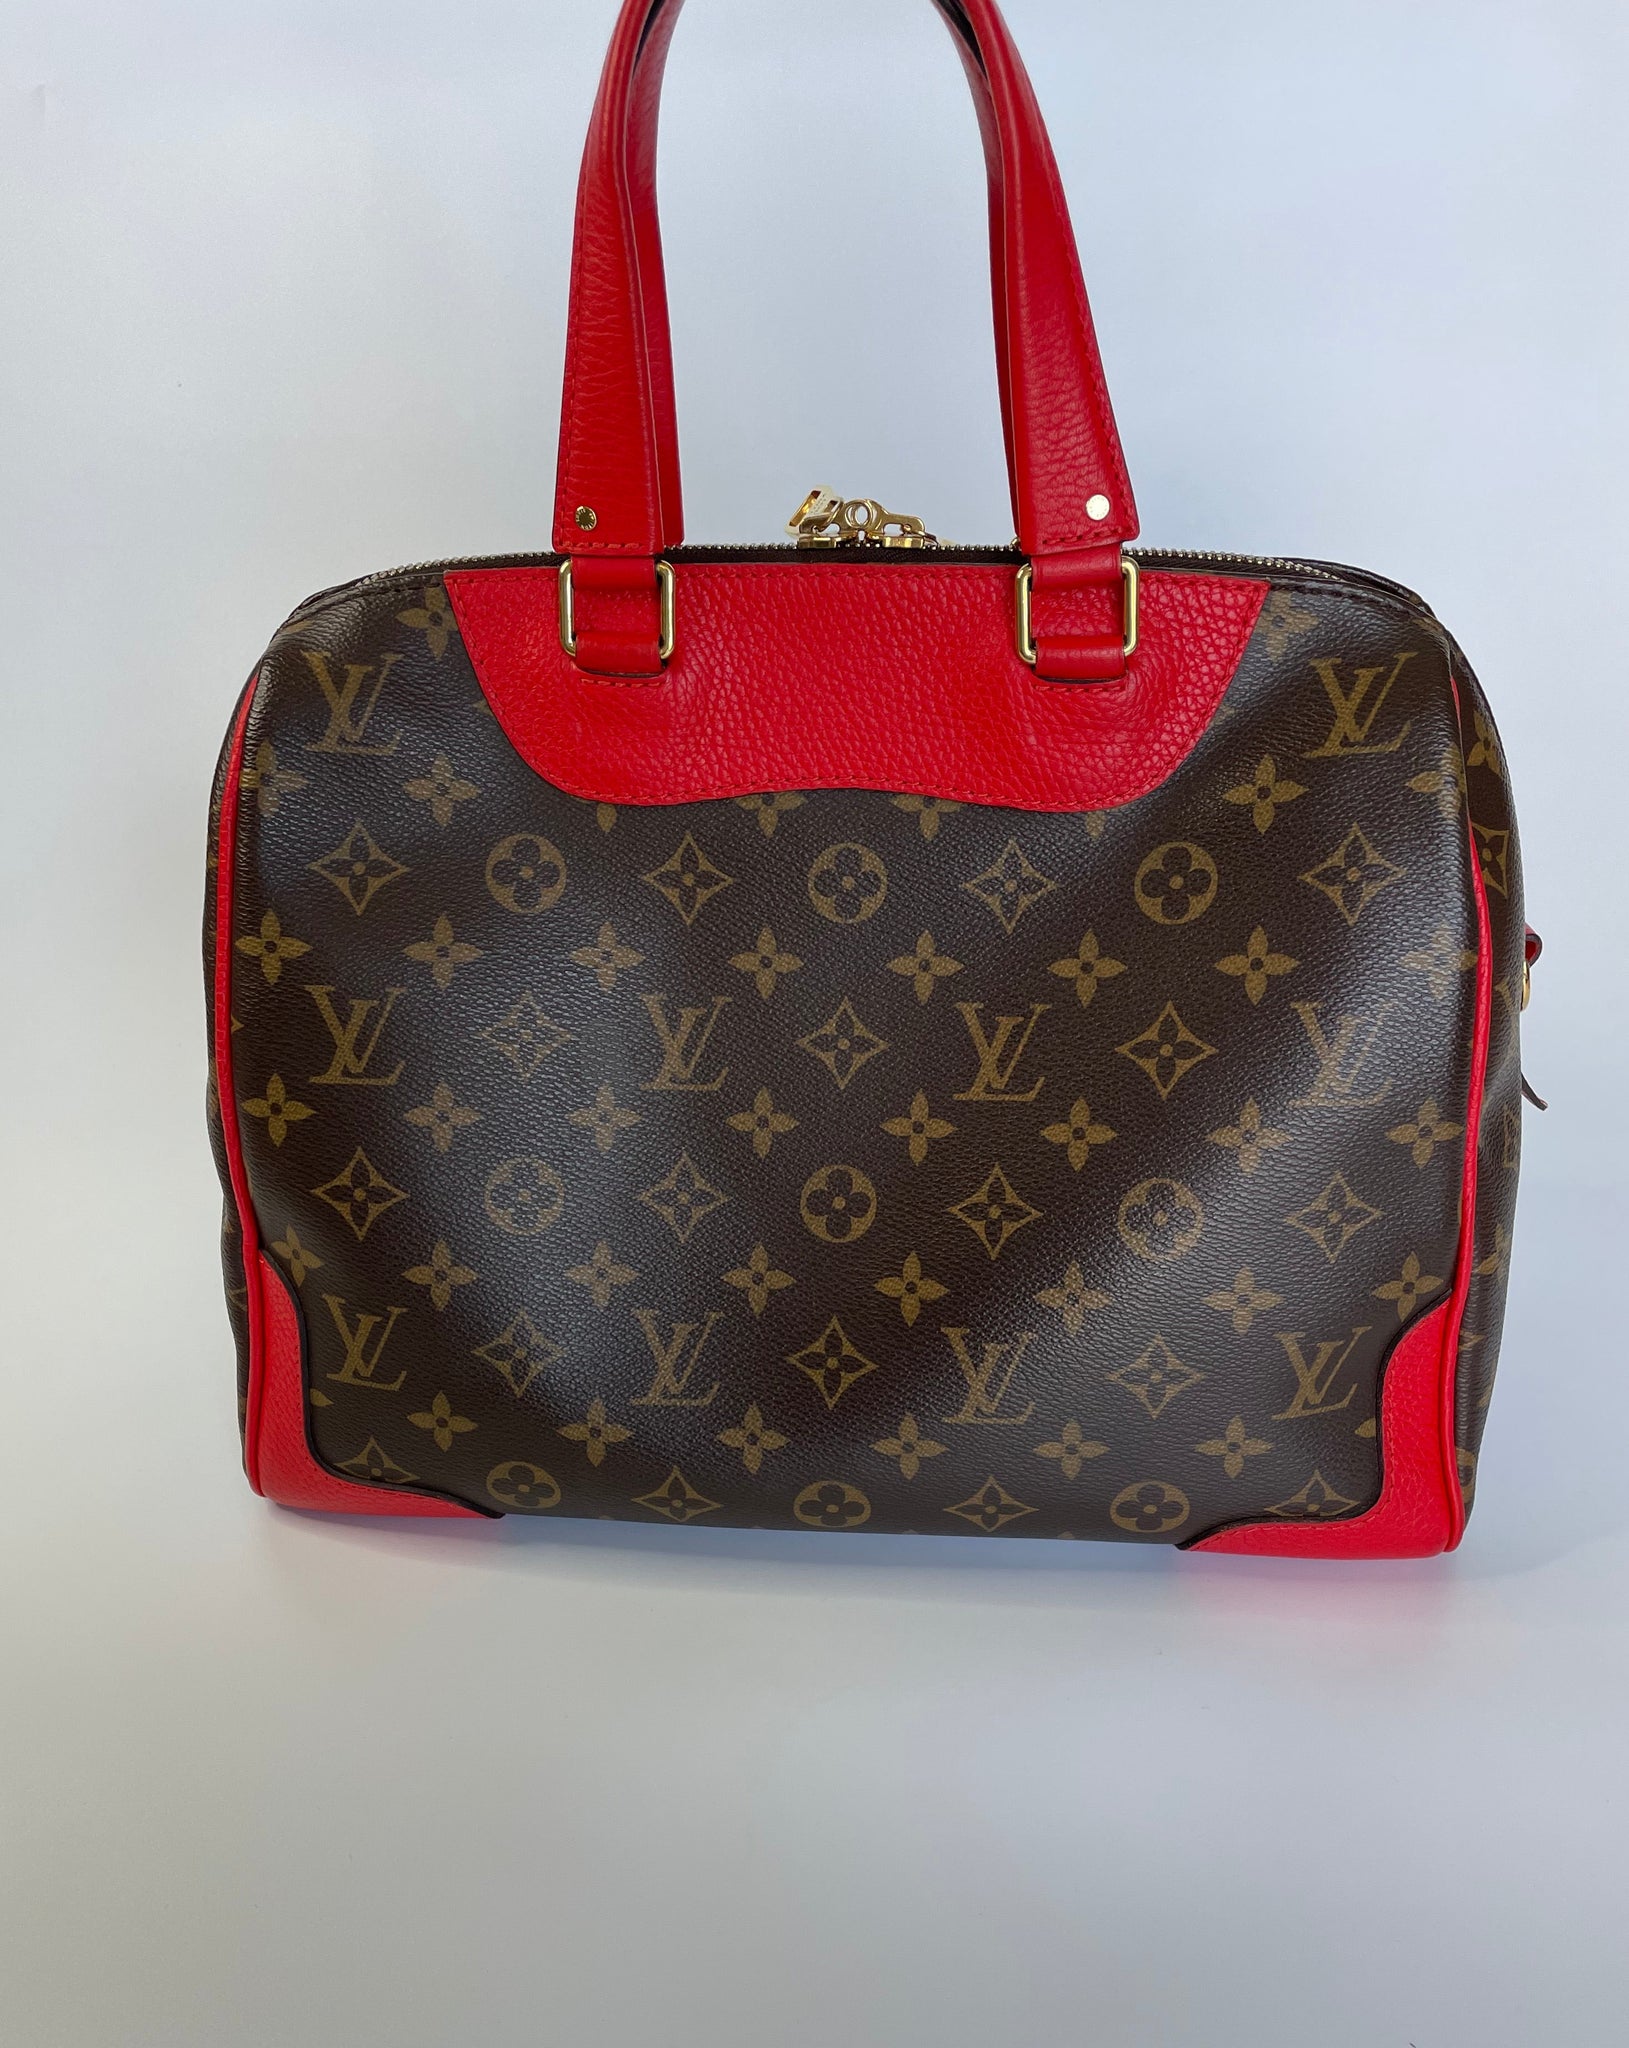 Louis Vuitton Retiro Handbag